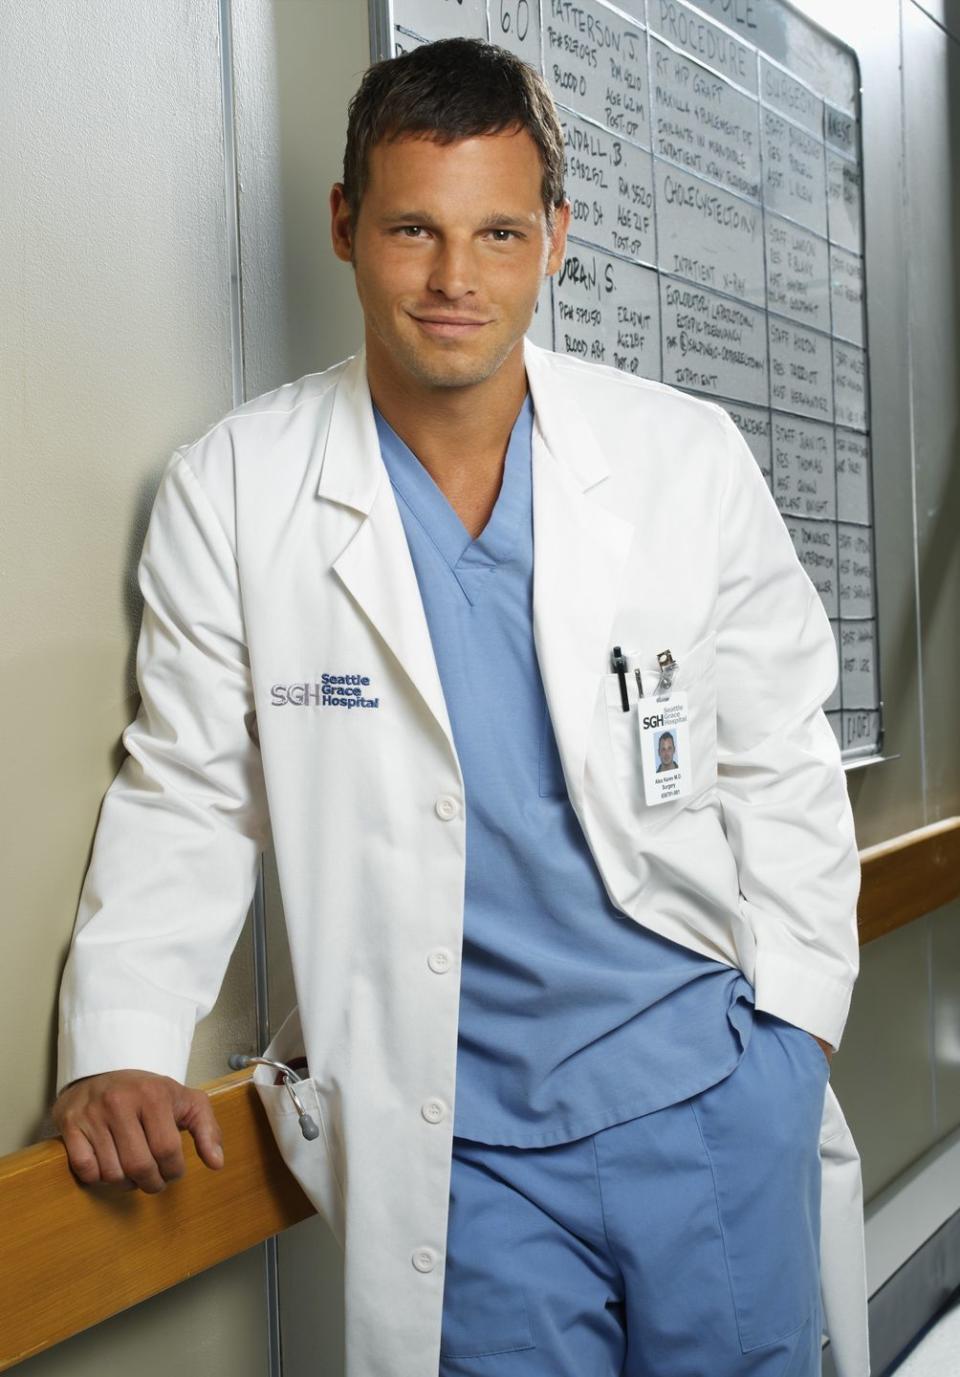 Dr. Karev wasn't in the original script